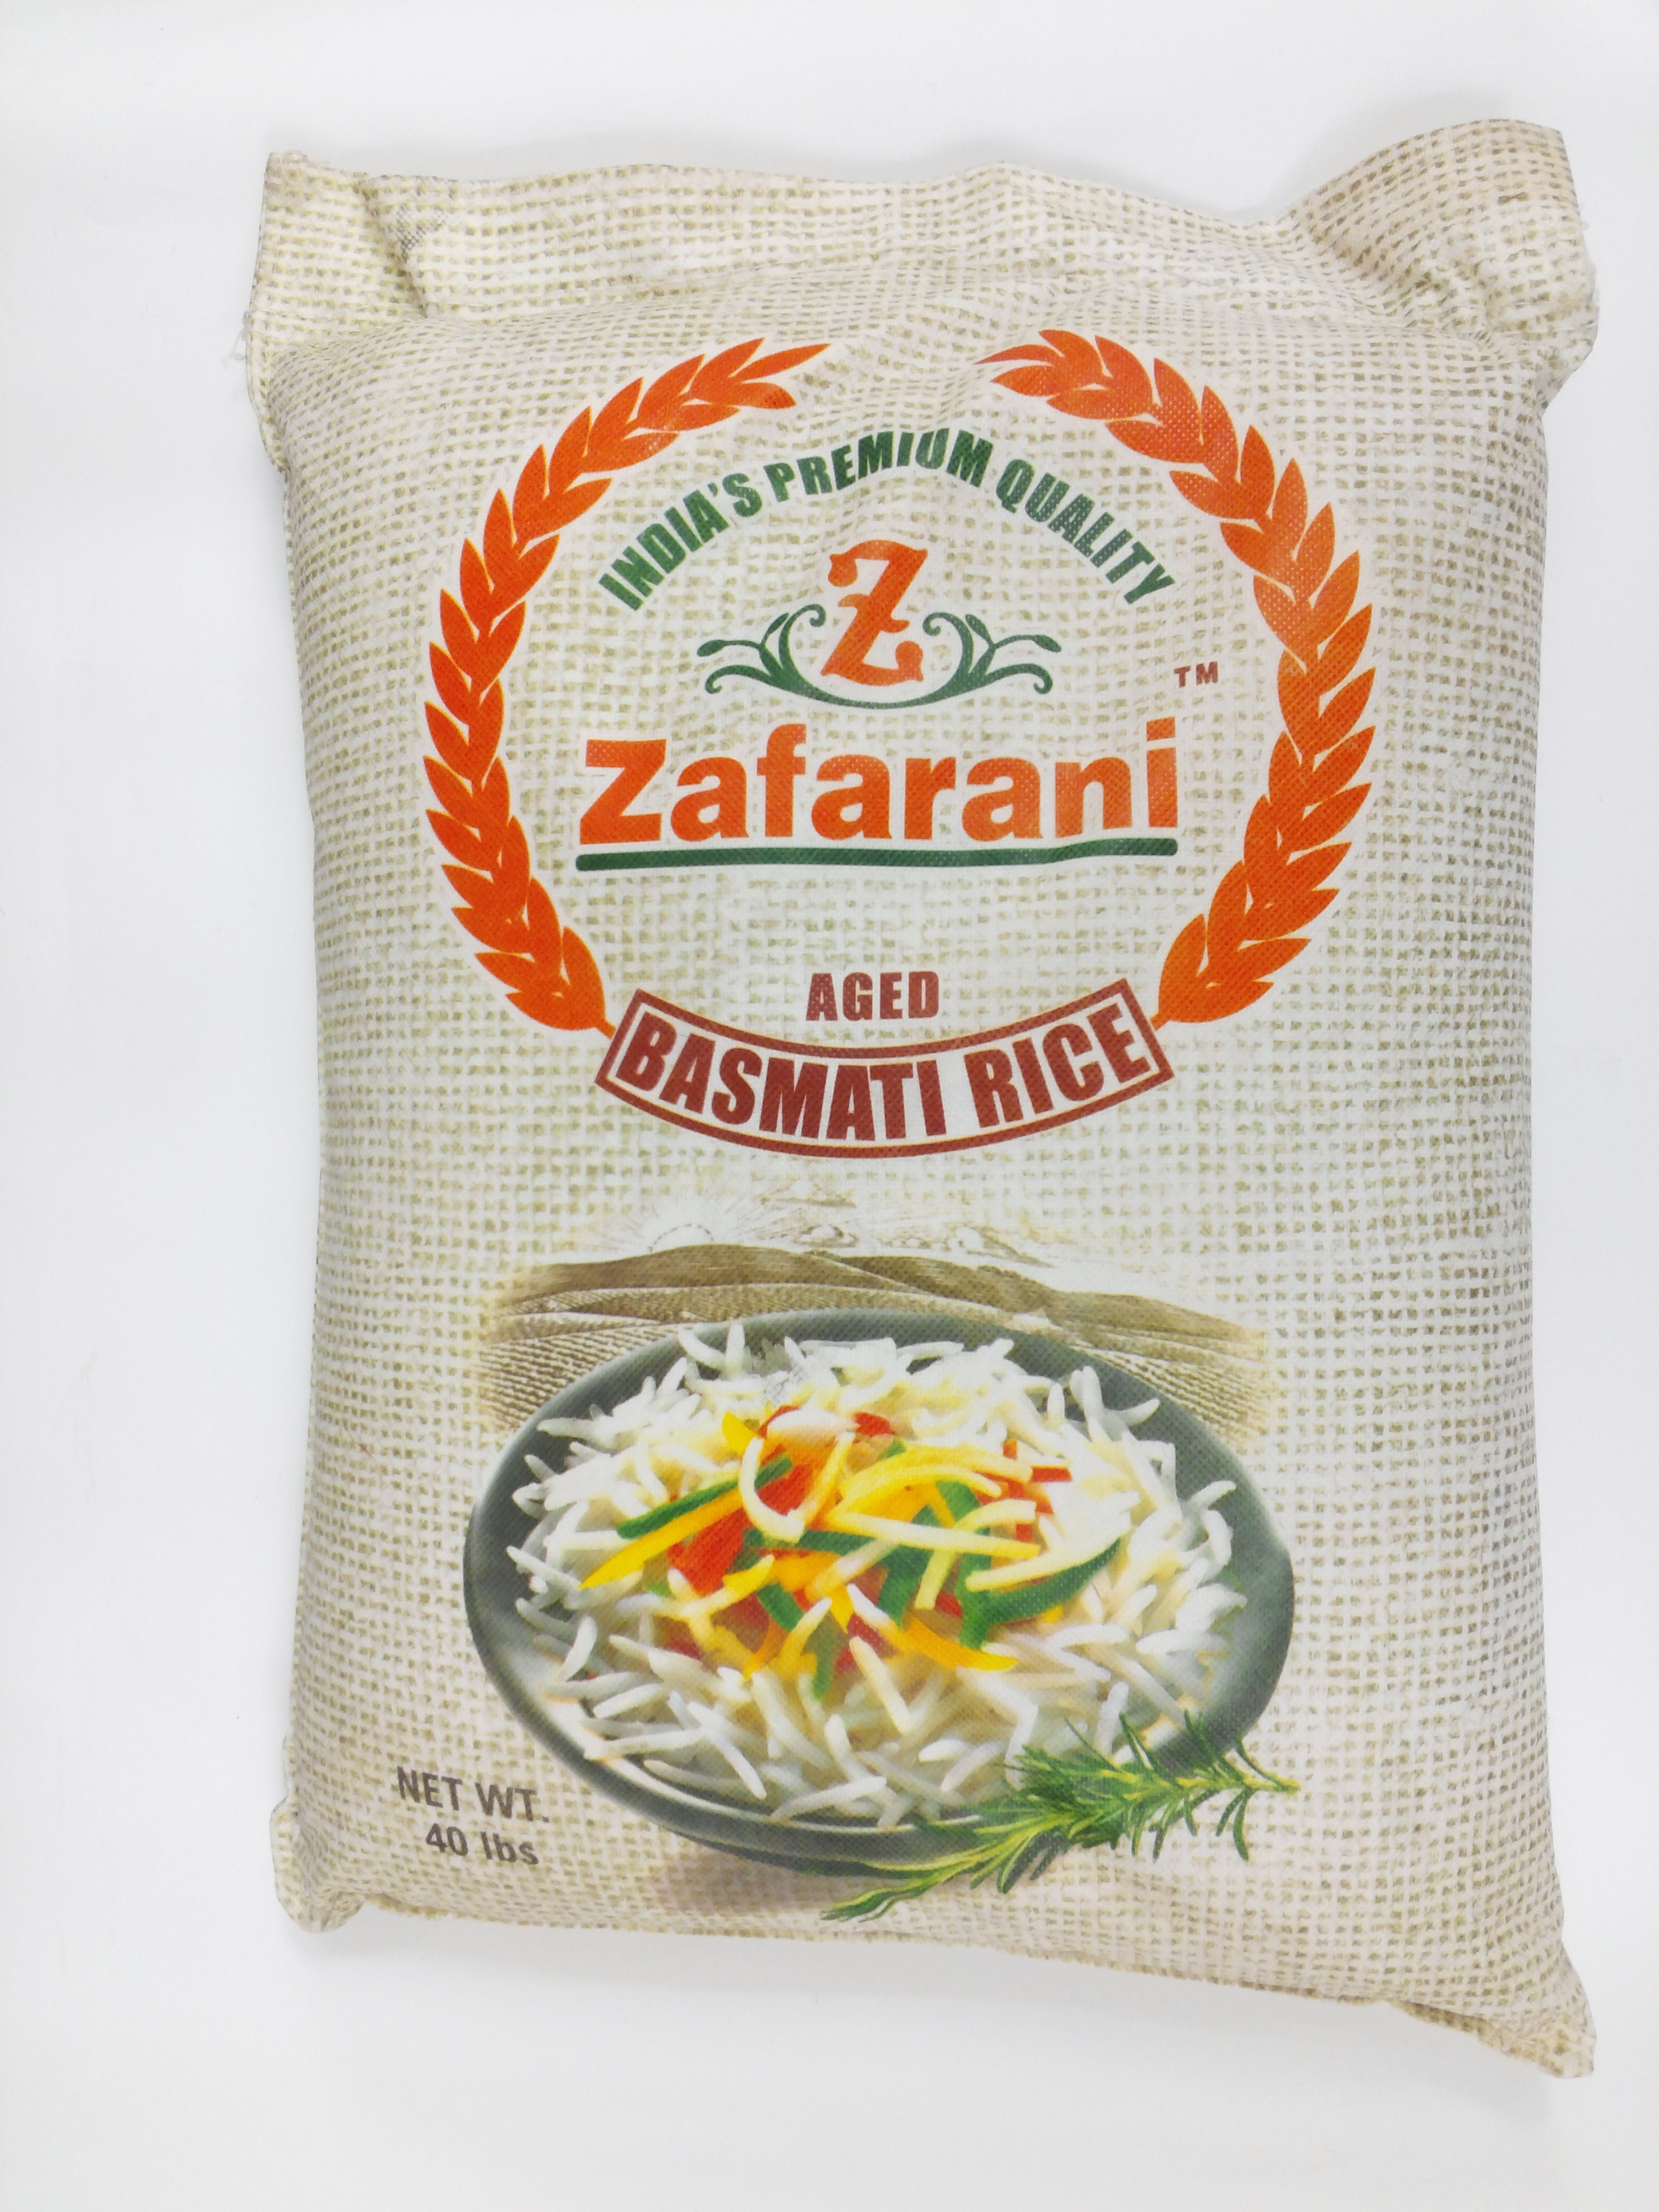 Zafarani Basmati Rice 40 lb